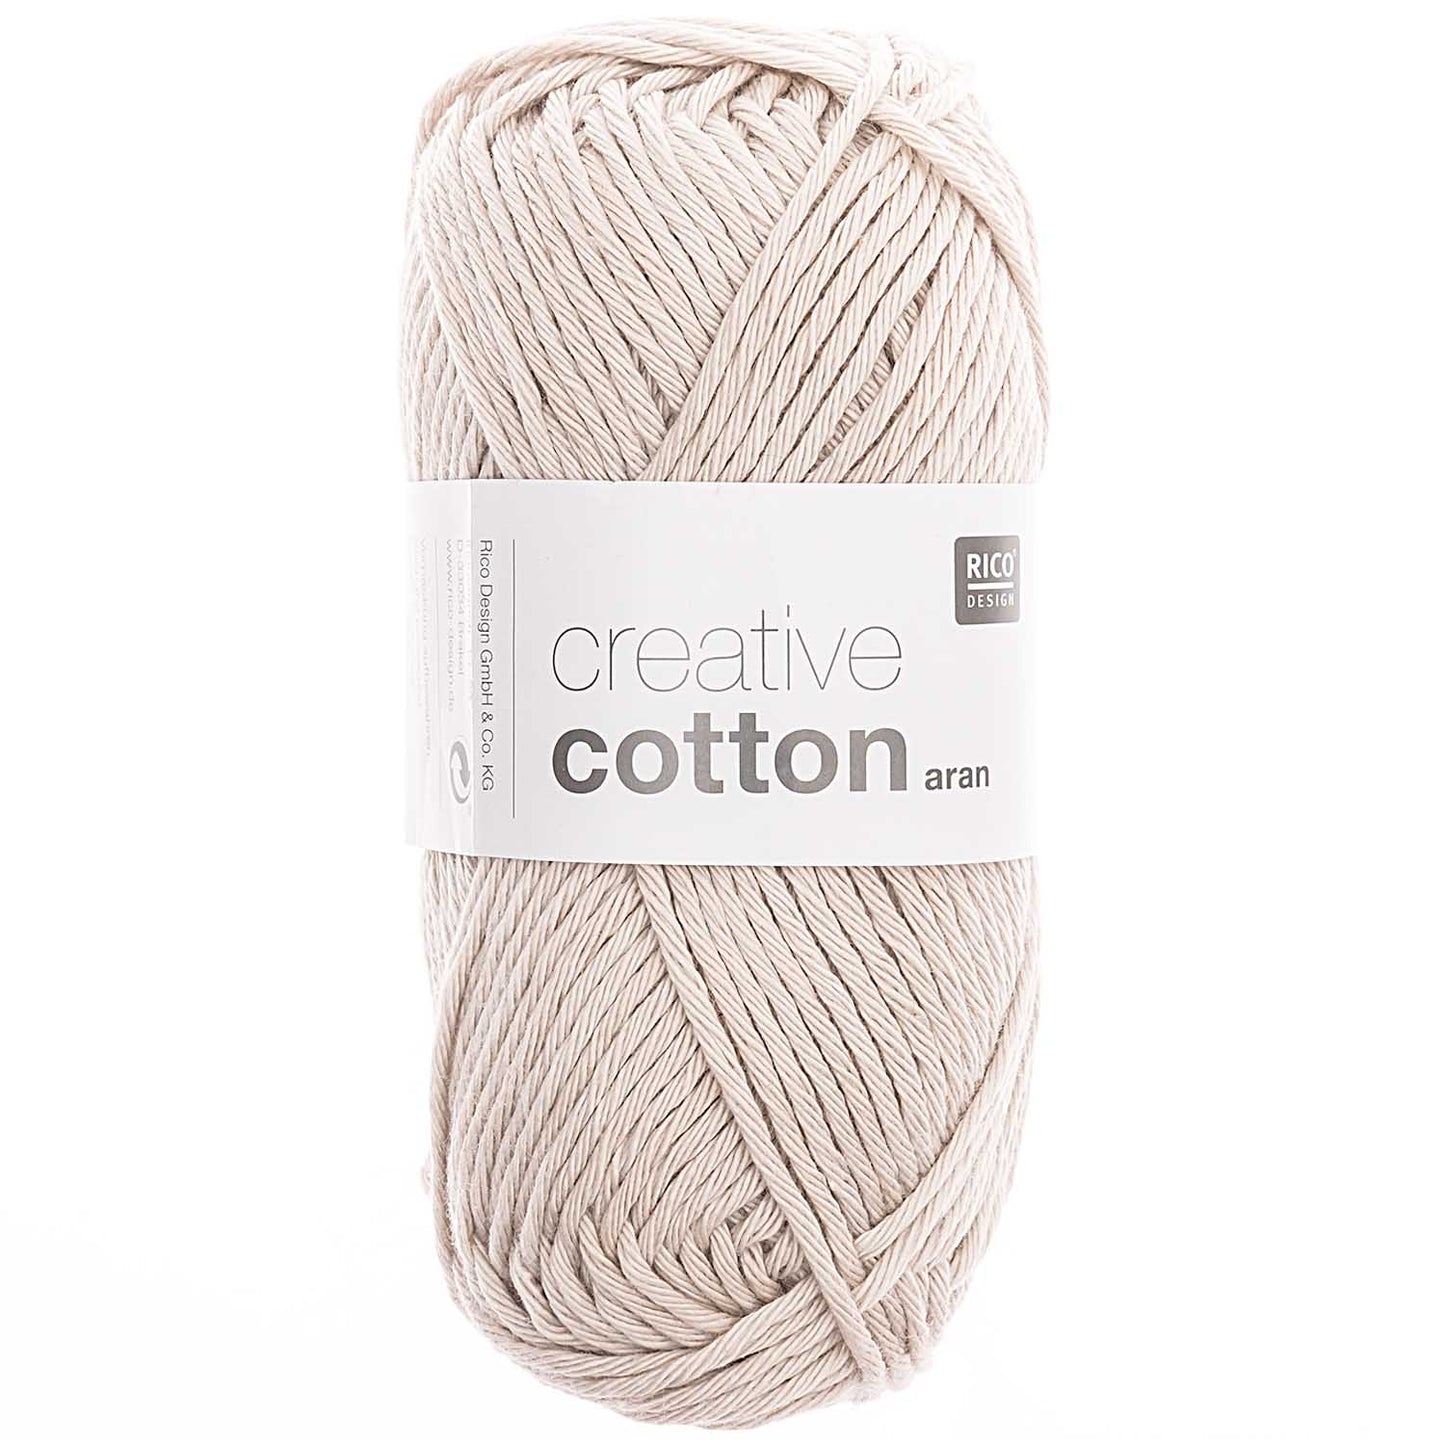 Creative Cotton Aran